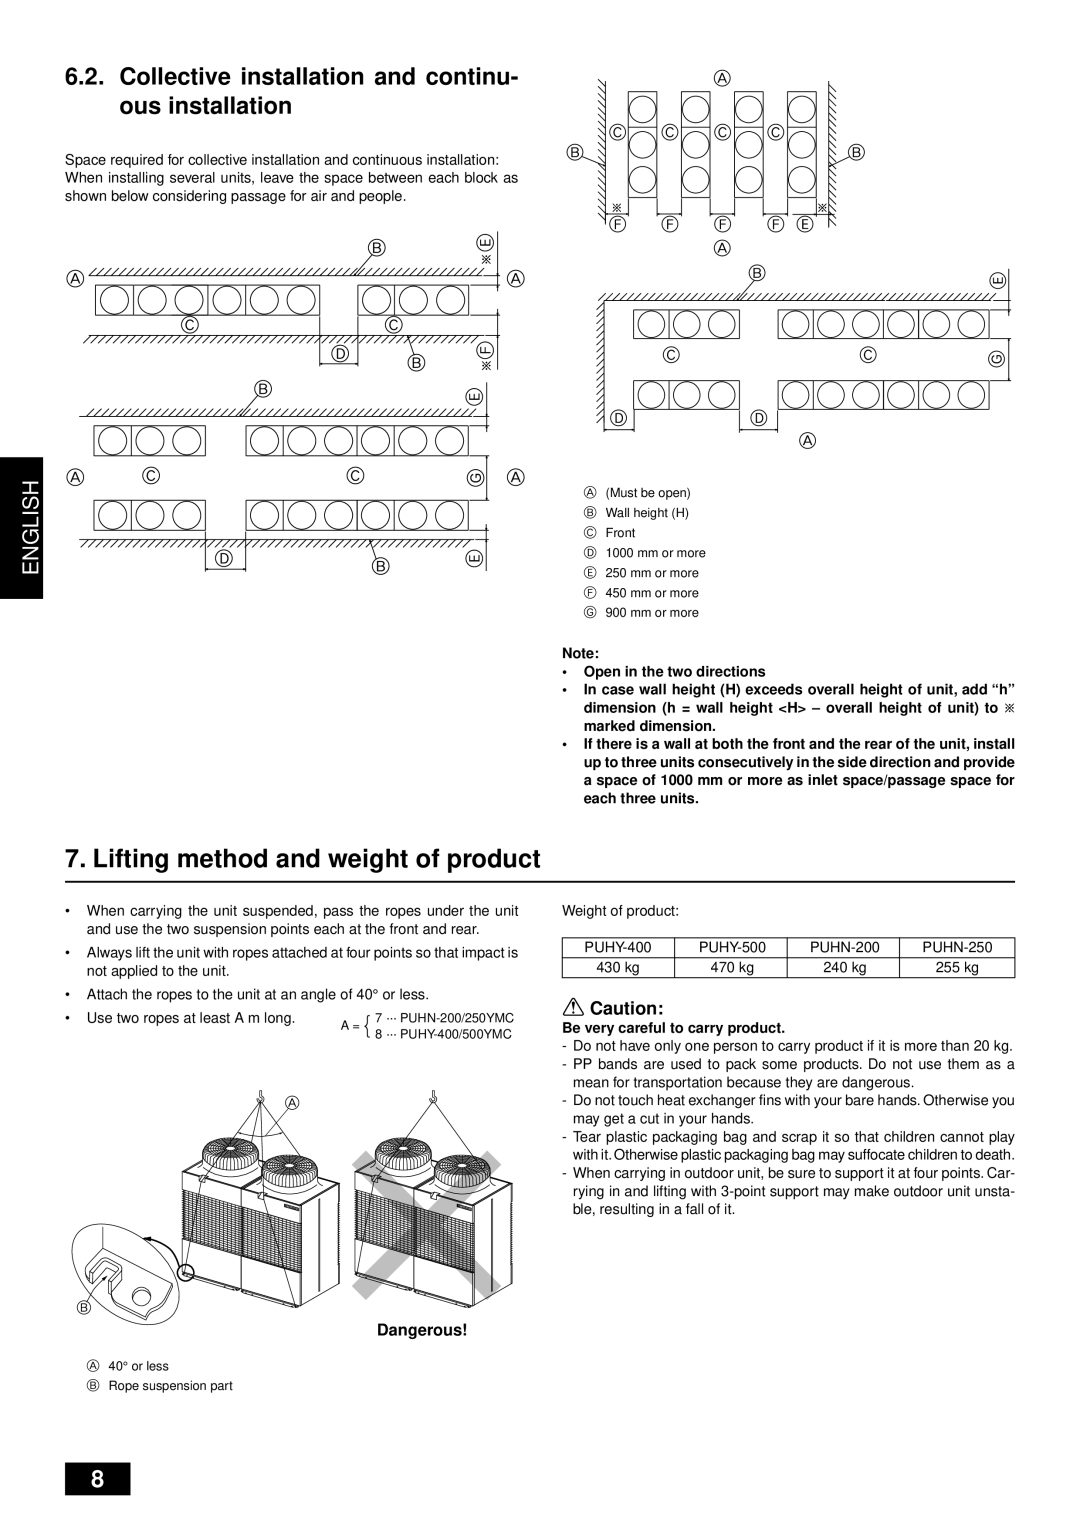 Mitsubishi Electronics PUHY-YMC installation manual Lifting method and weight of product, English 